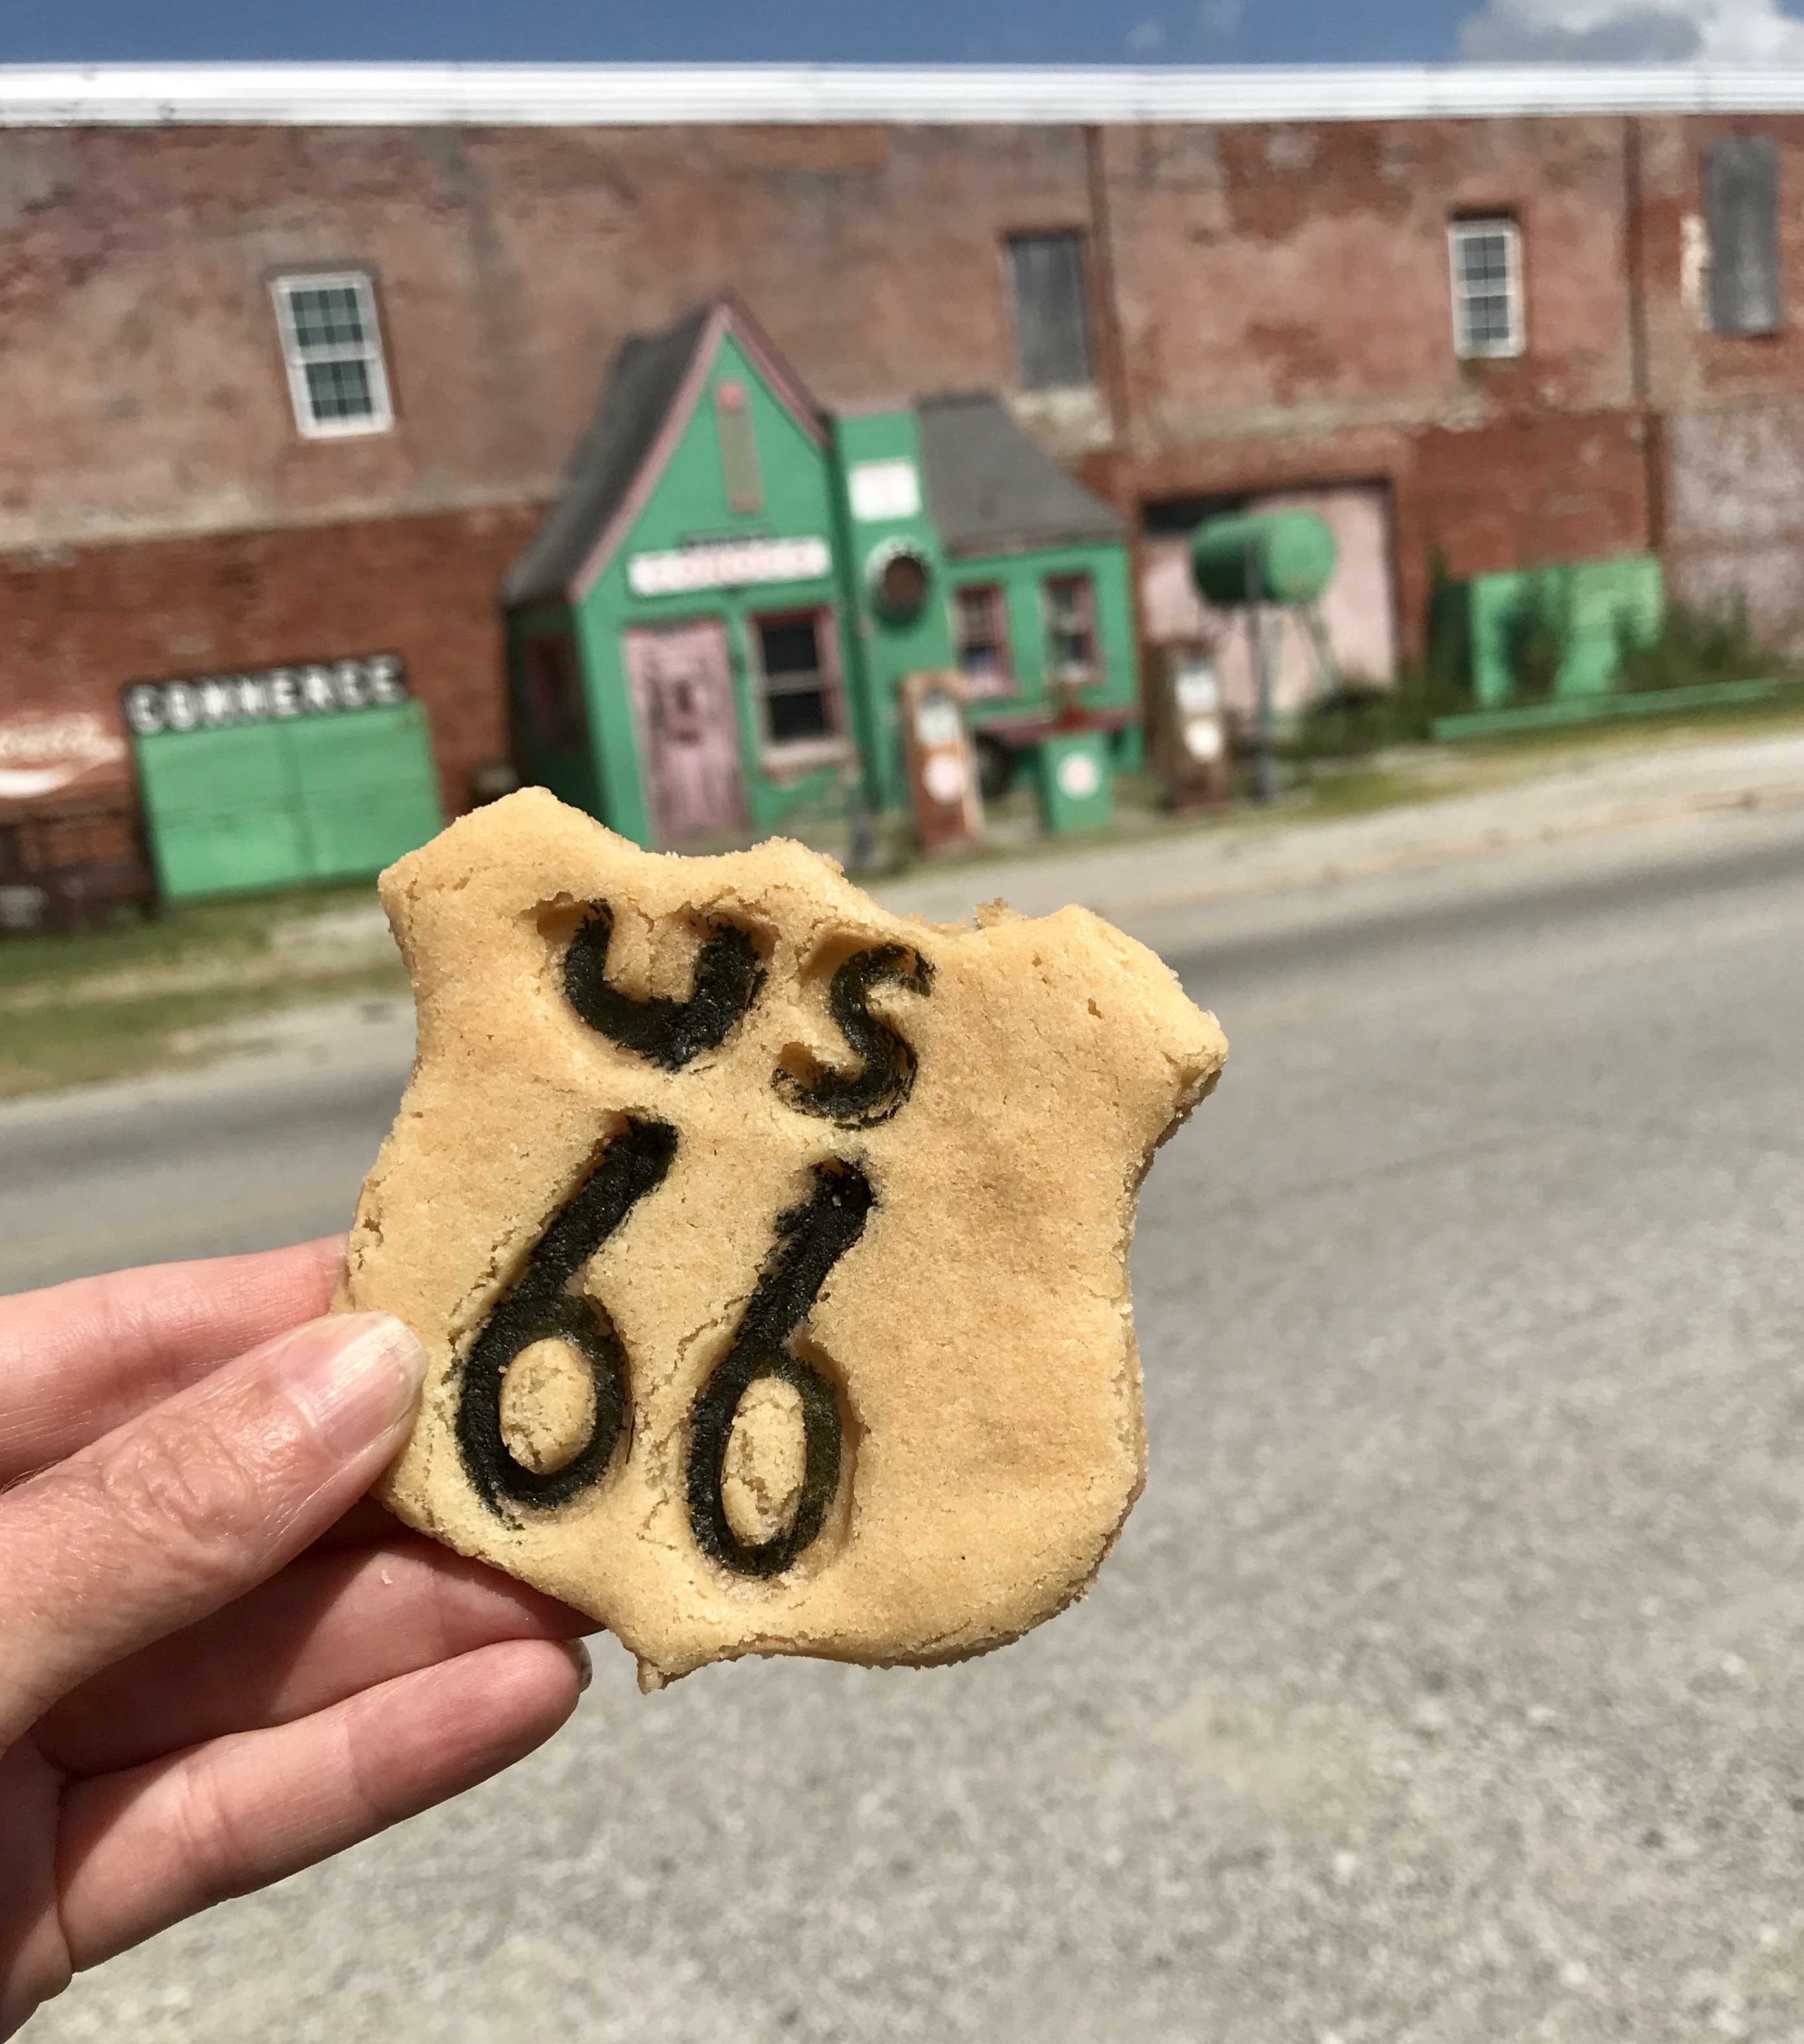 Route 66 Commerce, OK